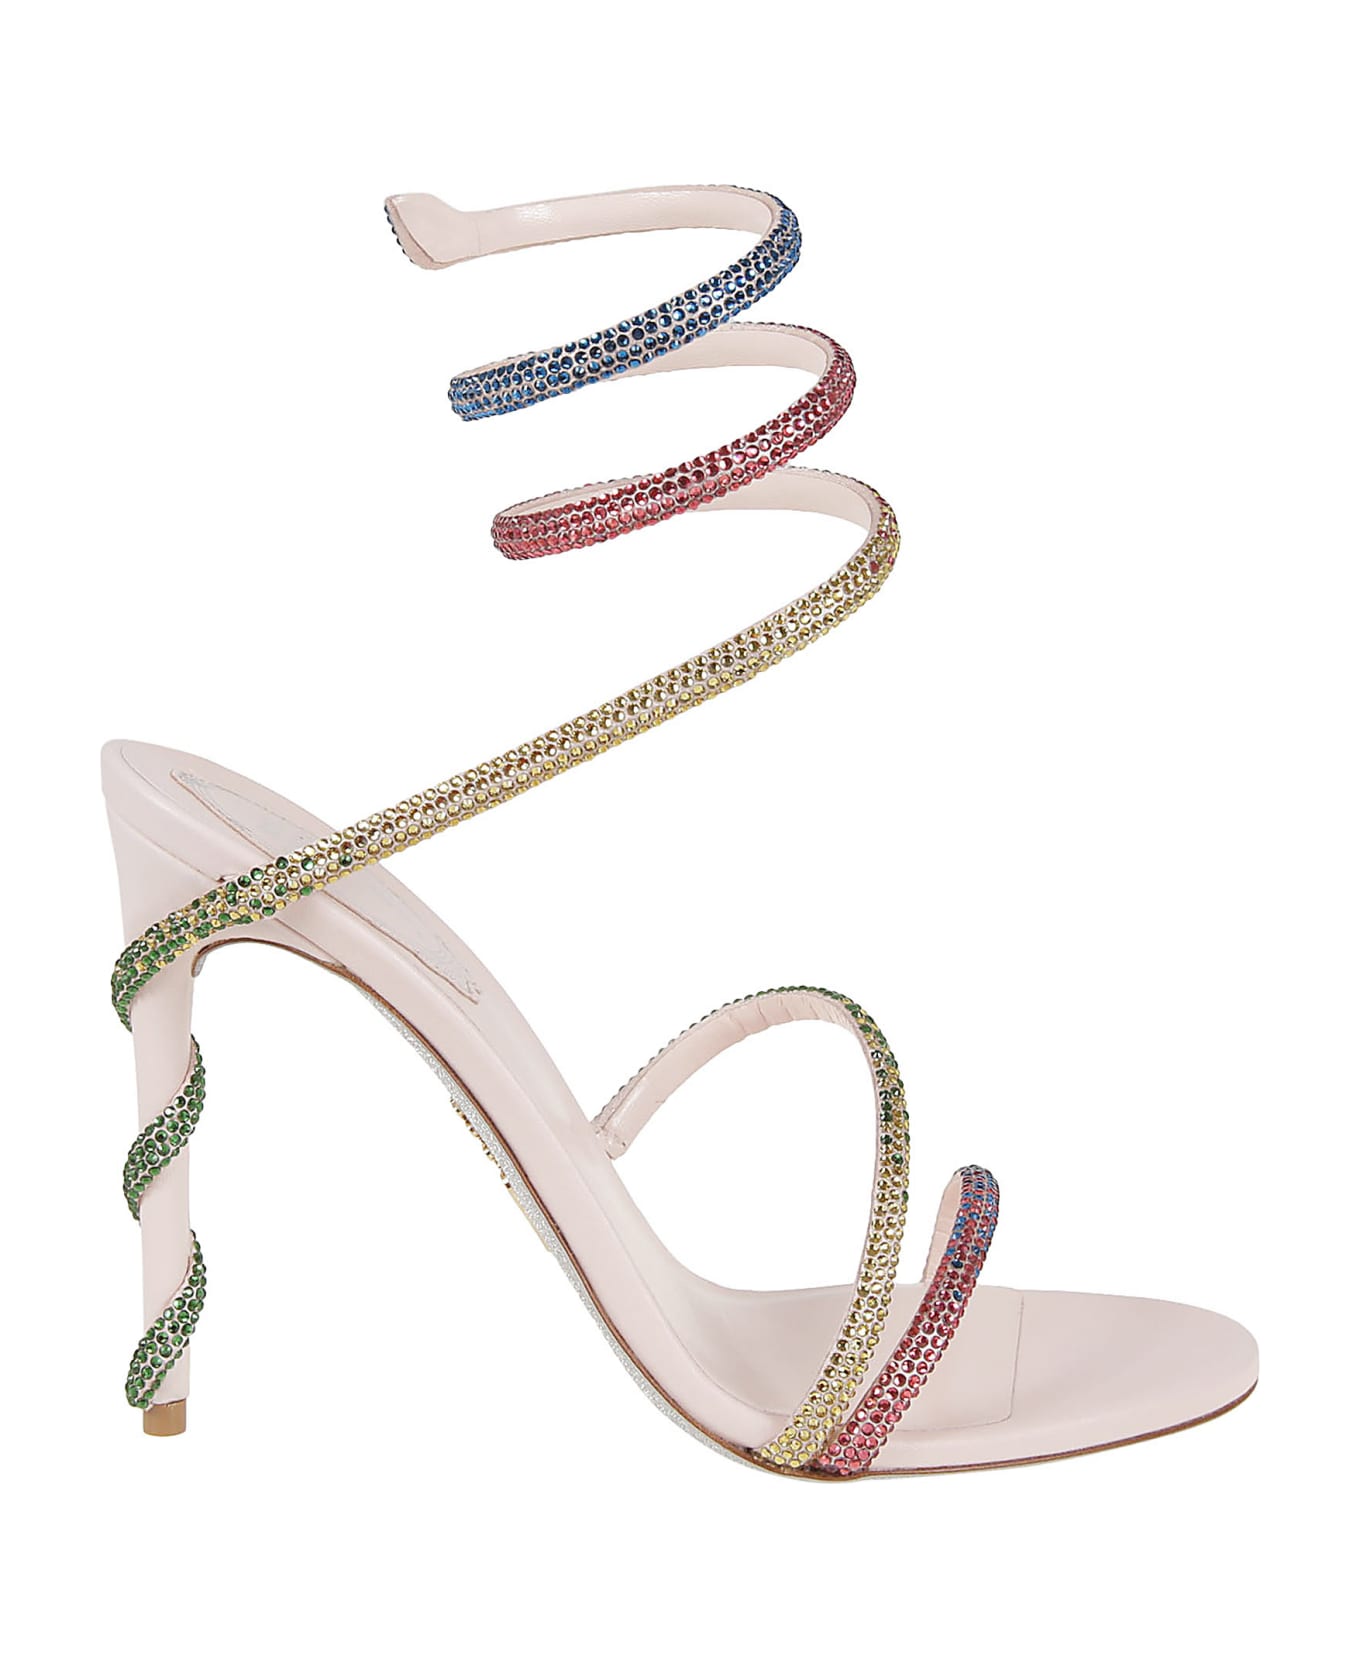 René Caovilla Sandal High Heel - Pink Satin Multicolor Strass